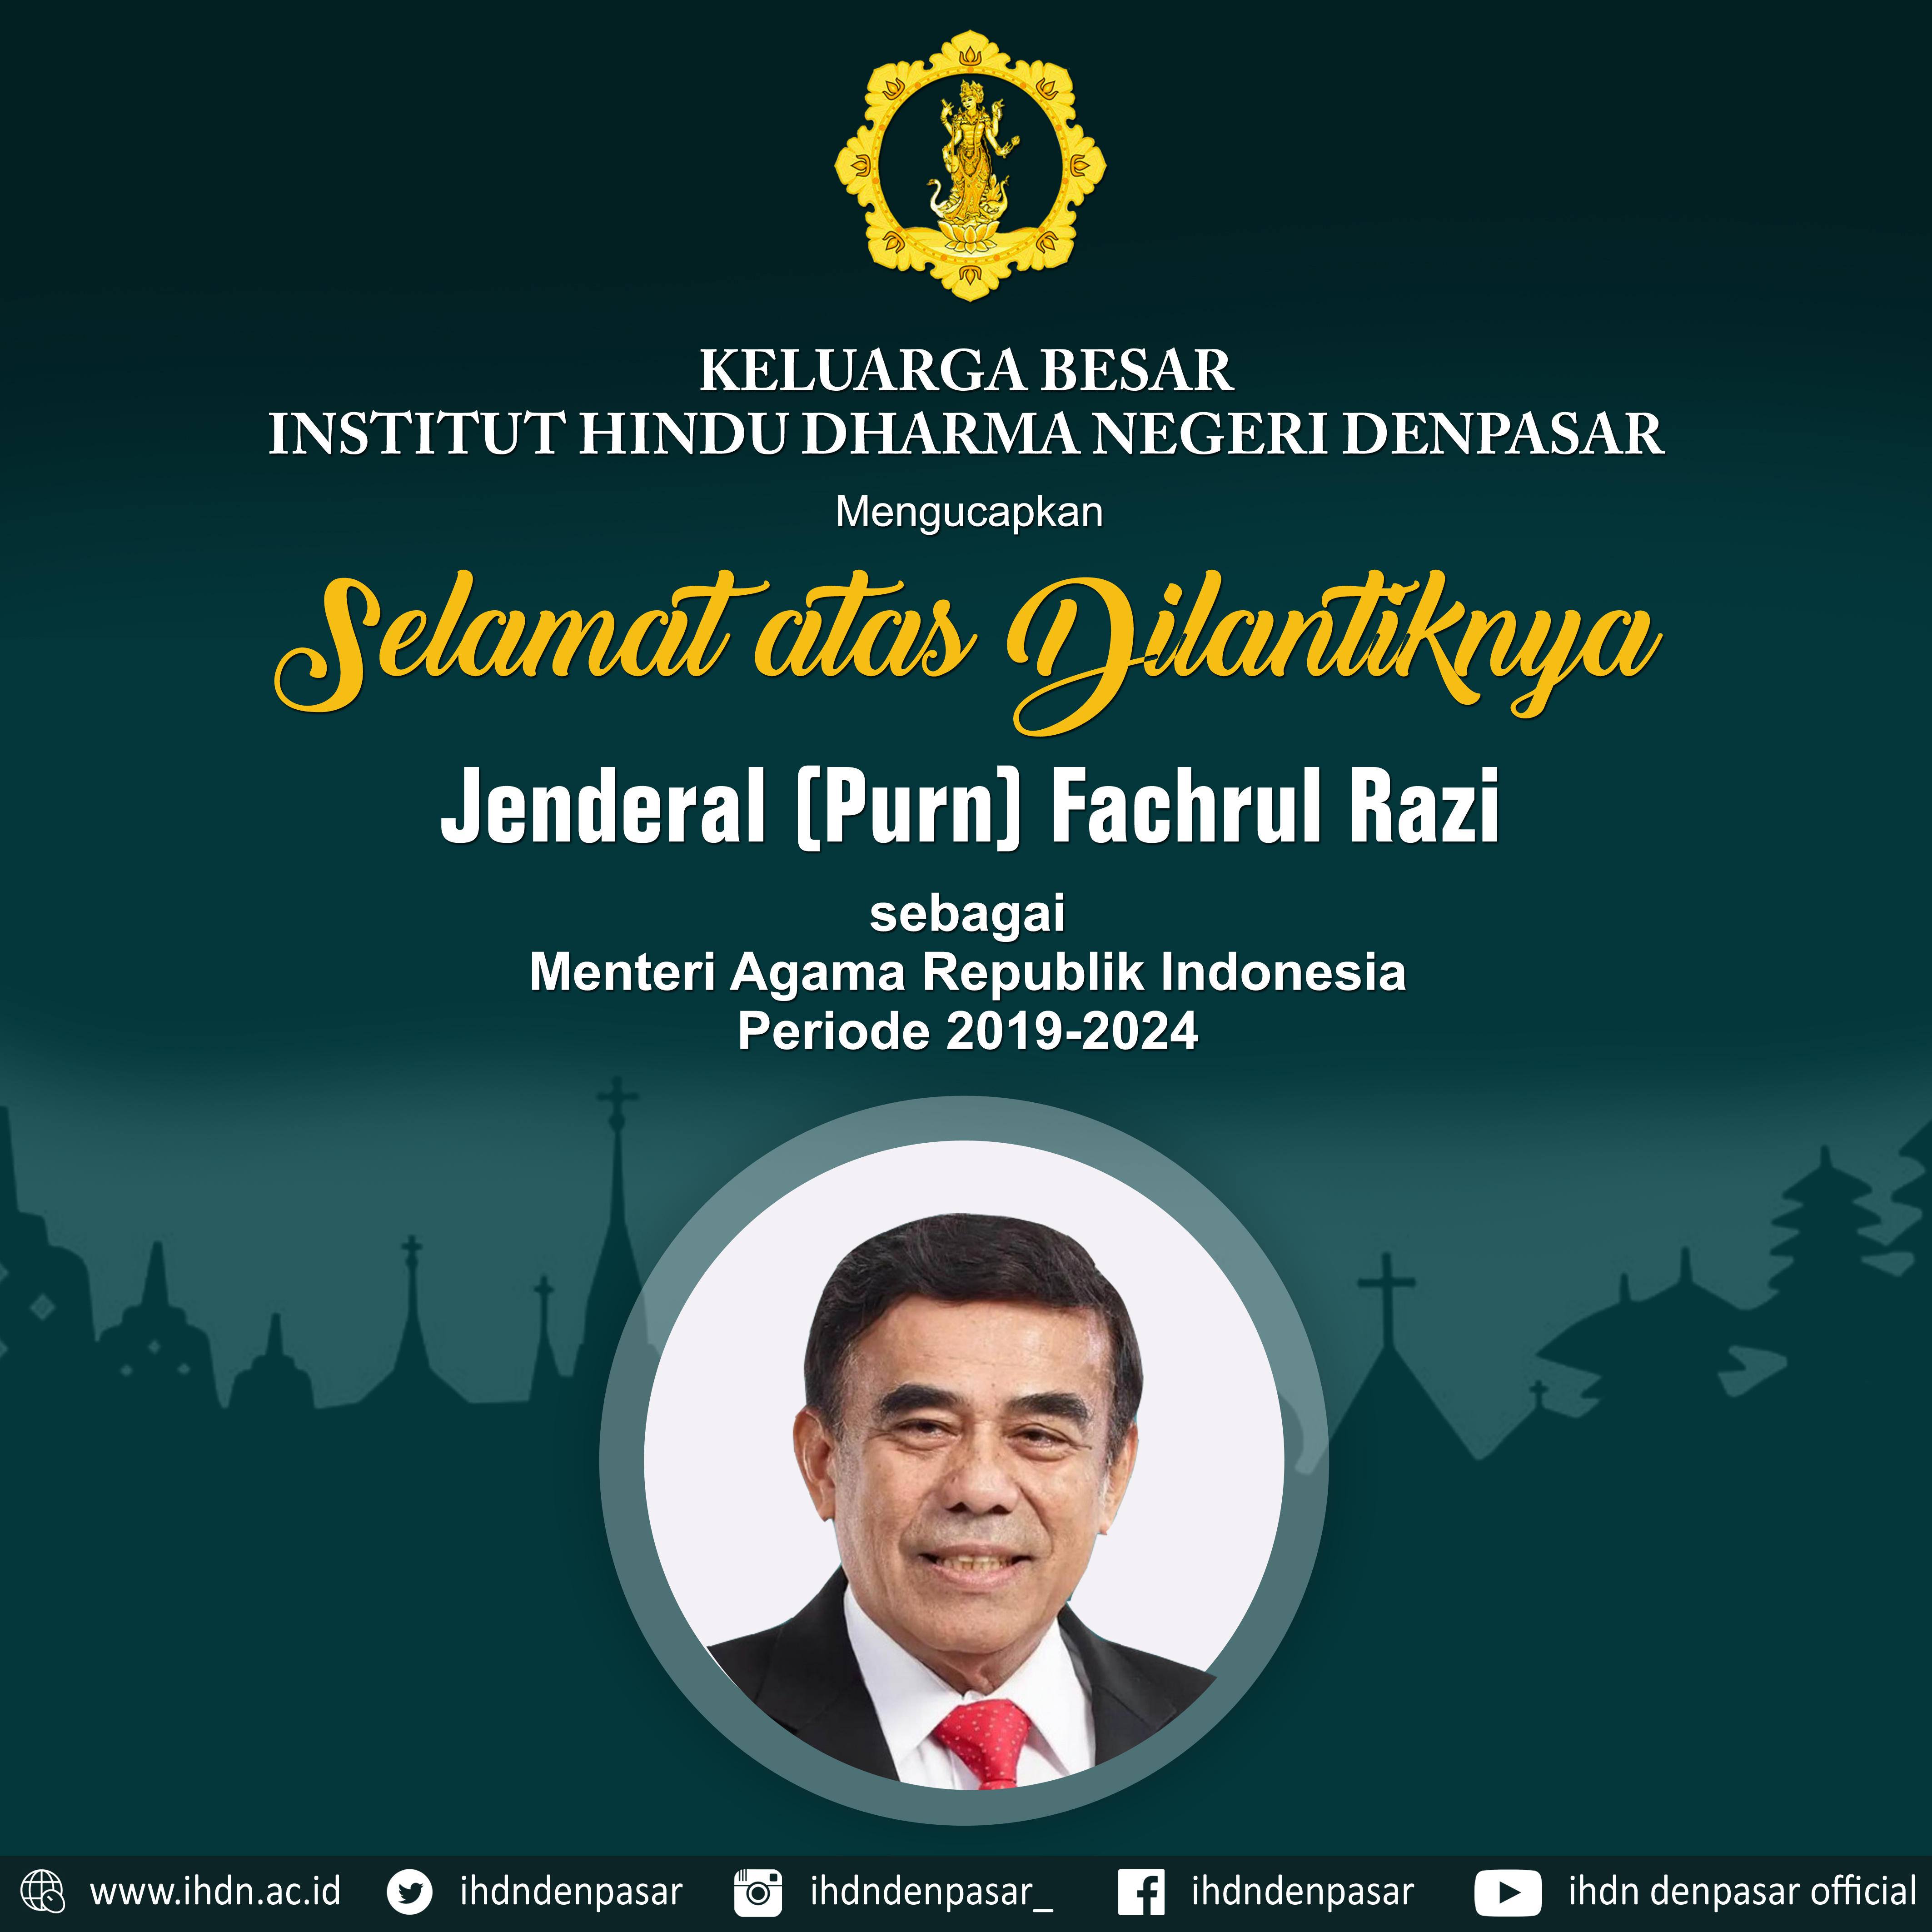 SELAMAT ATAS DILANTIKNYA JENDERAL (PURN) FACHRUL RAZI SEBAGAI MENTERI AGAMA REPUBLIK INDONESIA PERIODE 2019-2024